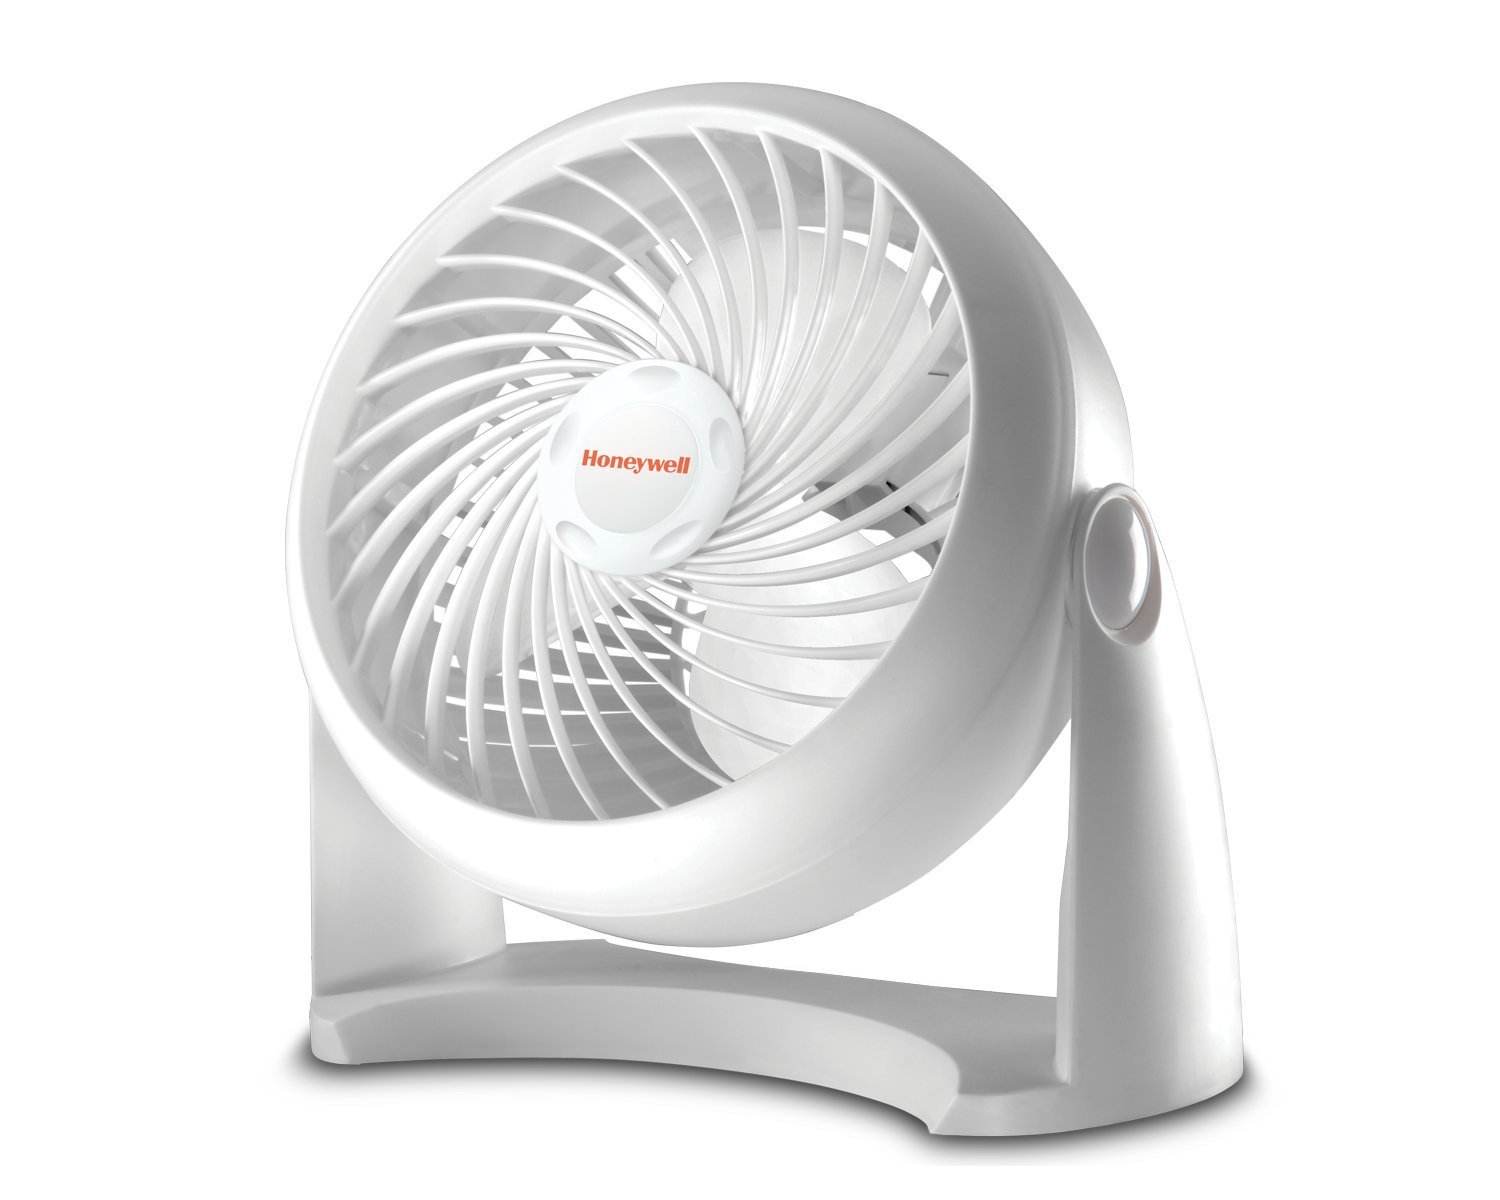 Honeywell Tabletop Air-Circulator Fan in White – Just $11.39!